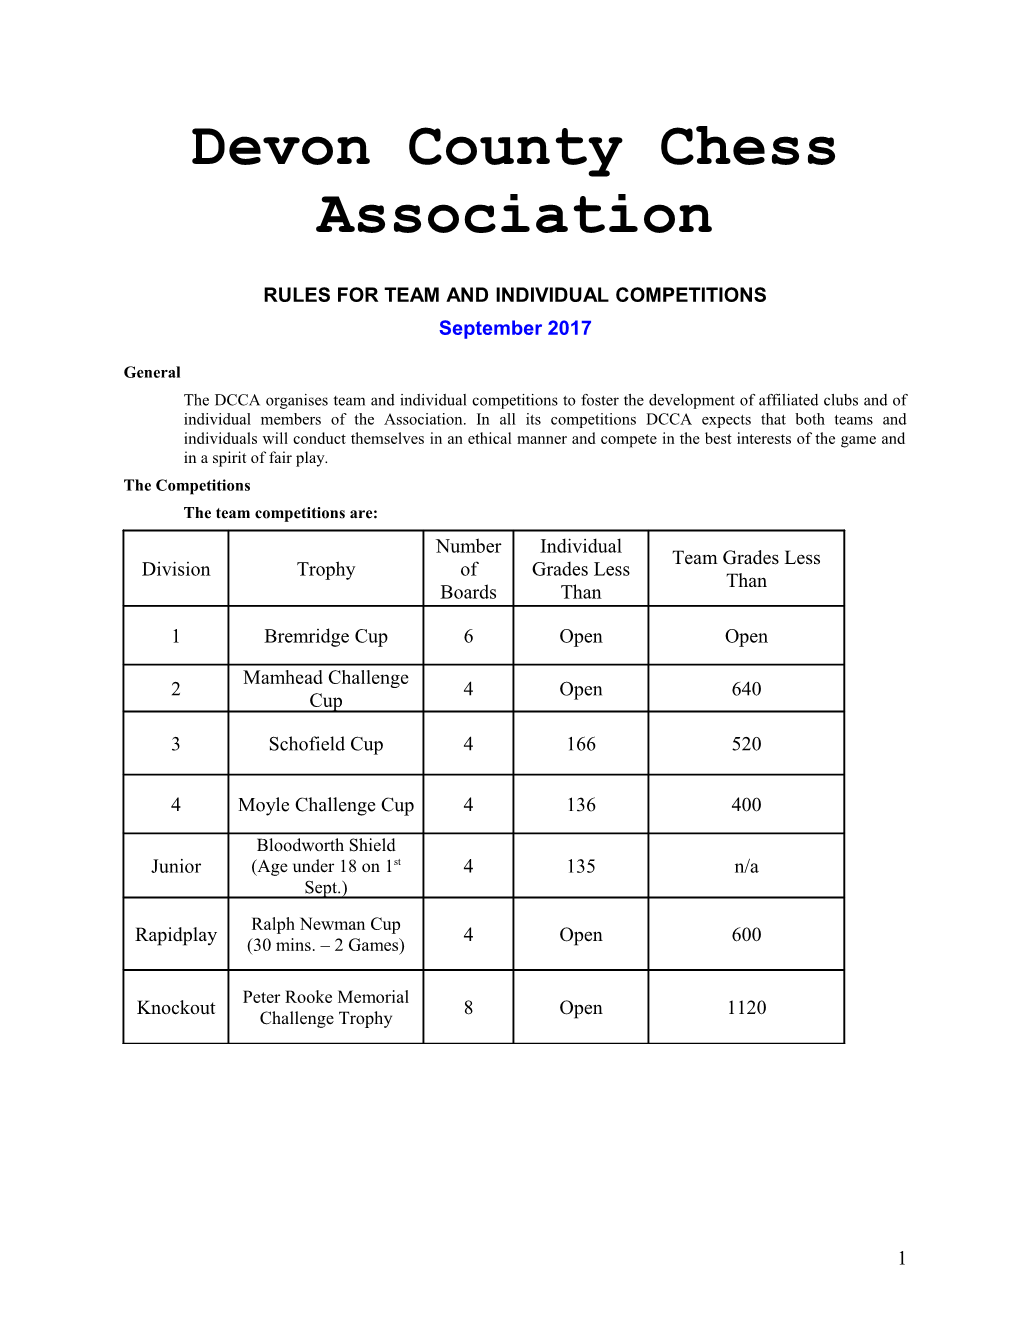 Devon County Chess Association